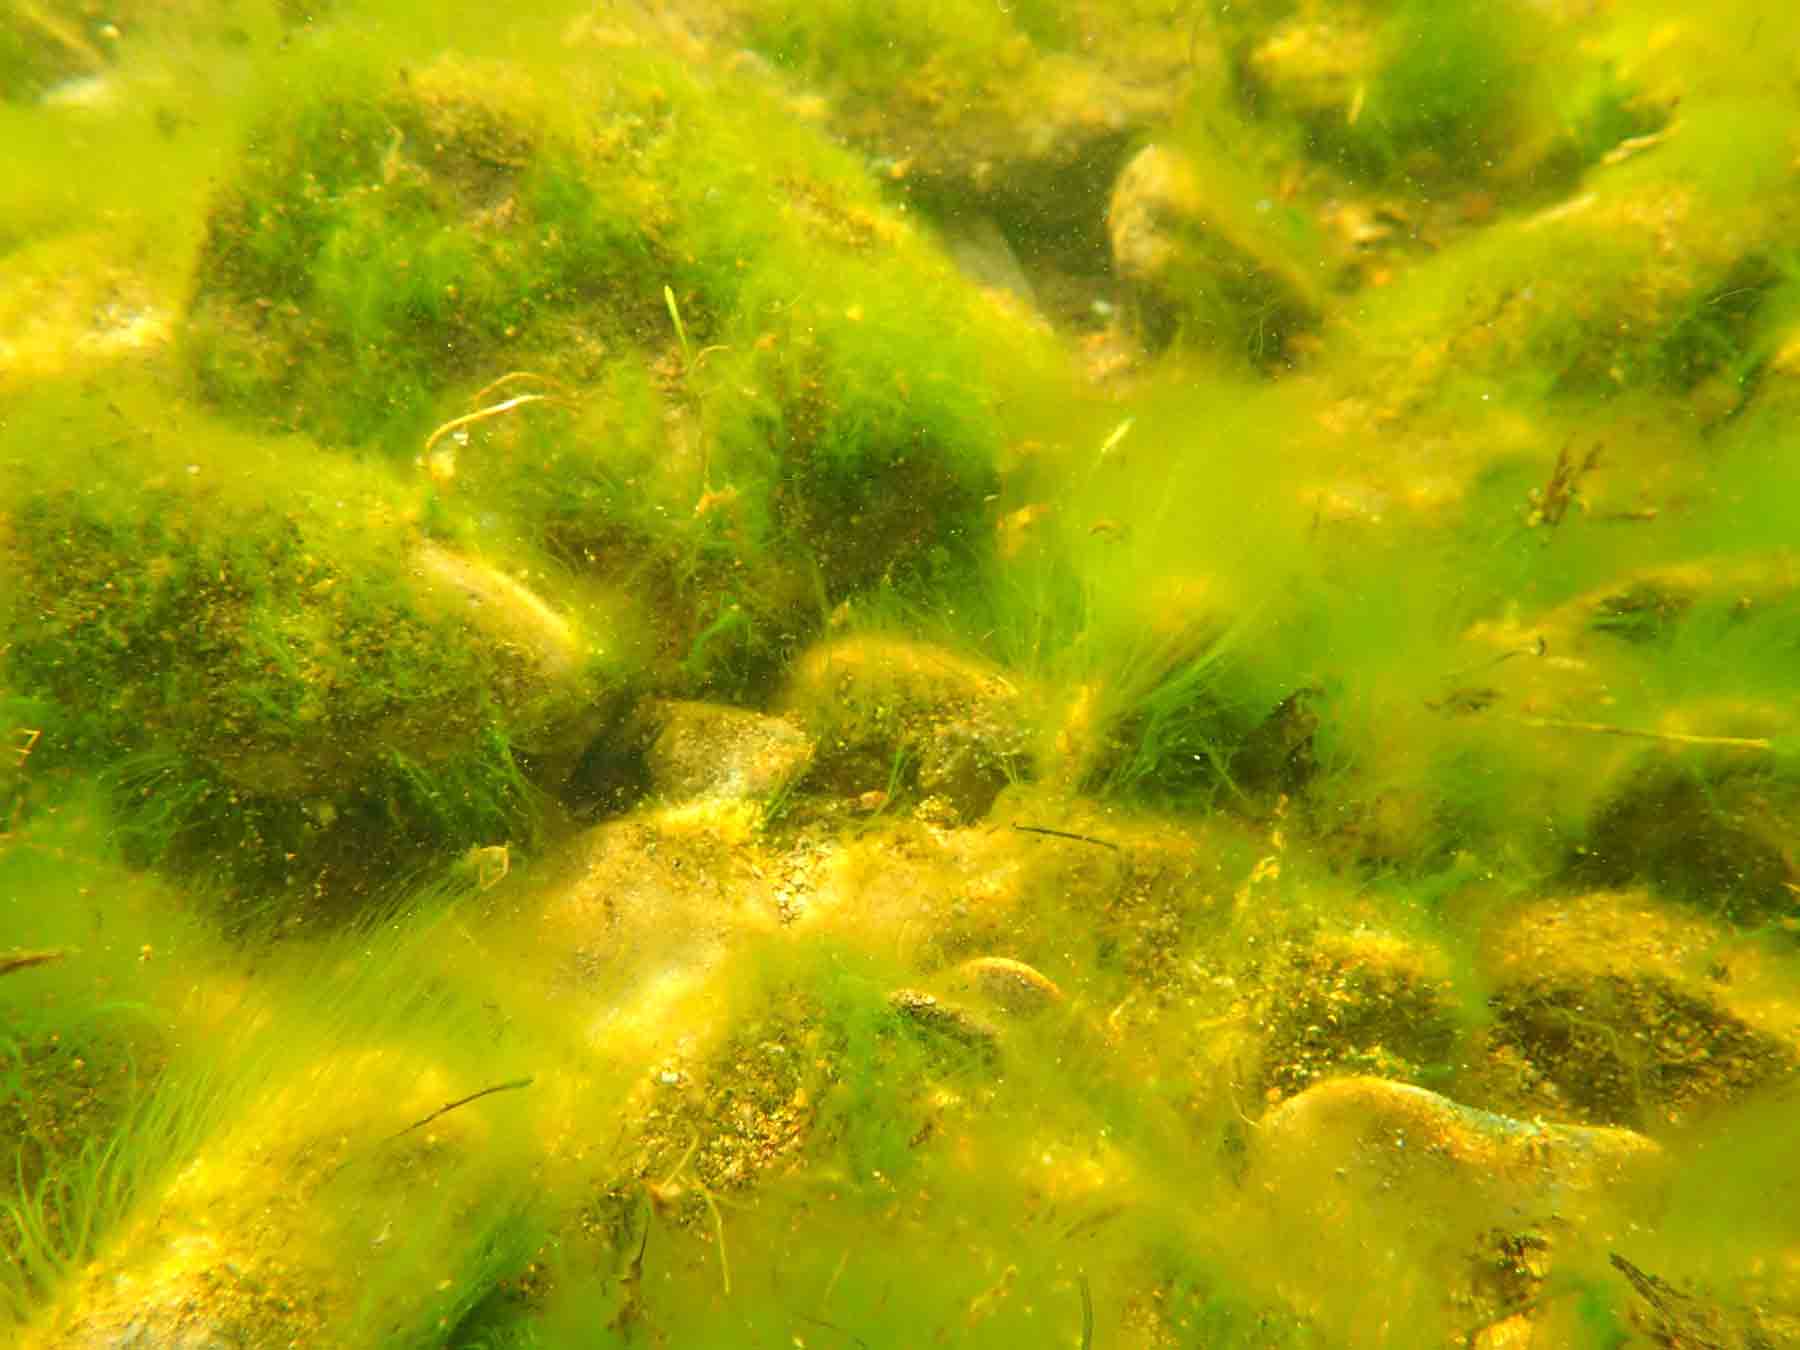 18 водоросли. Улотрикс водоросль. Ультрикс водоросли. Зеленые водоросли спирогира. Зеленые водоросли улотрикс.